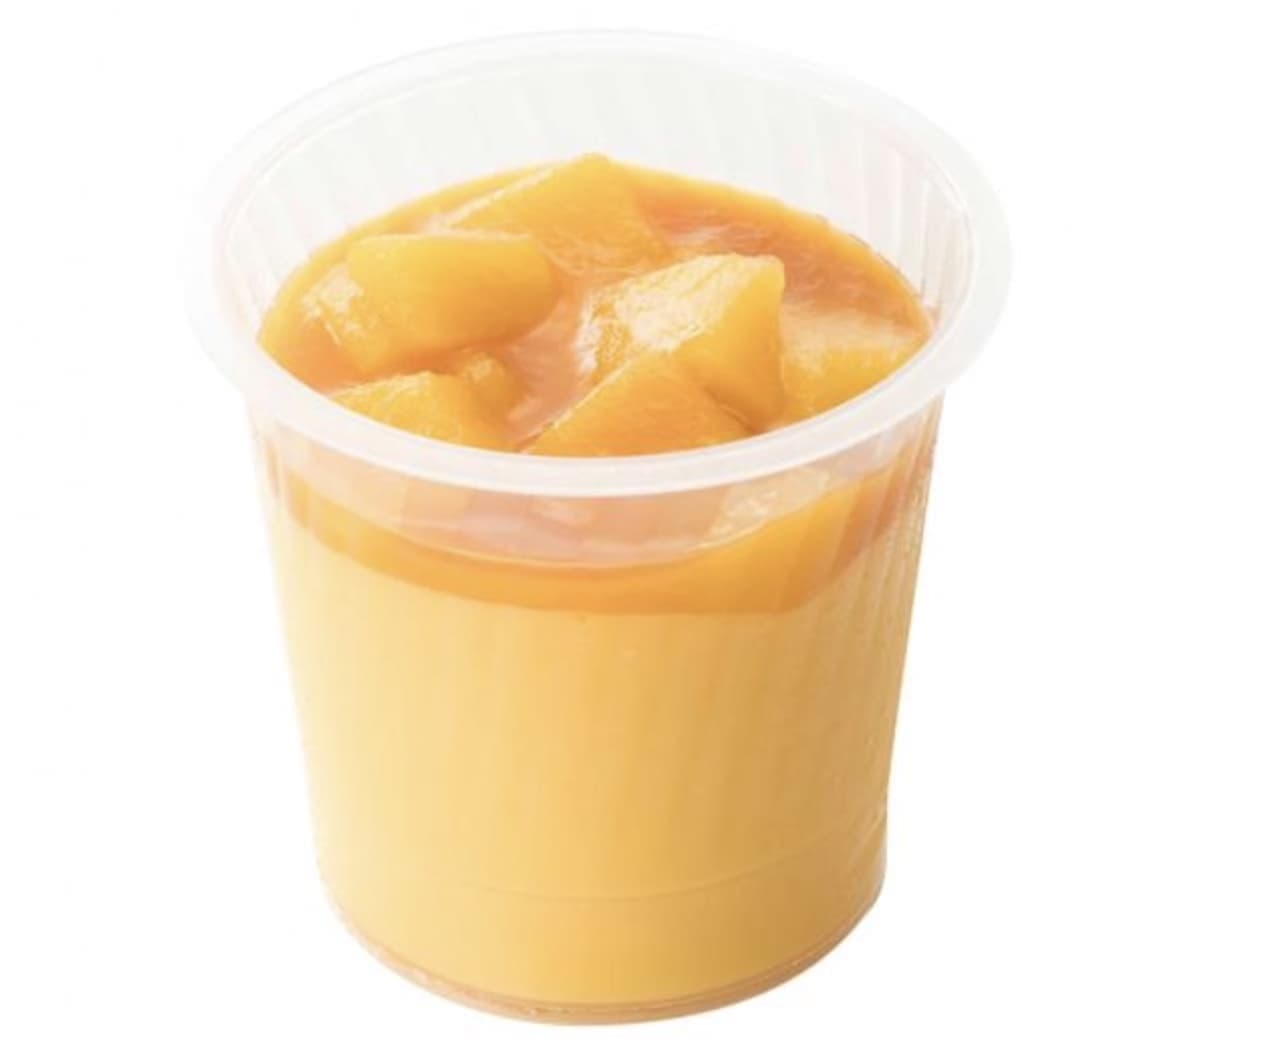 Chateraise "Mango Pudding"